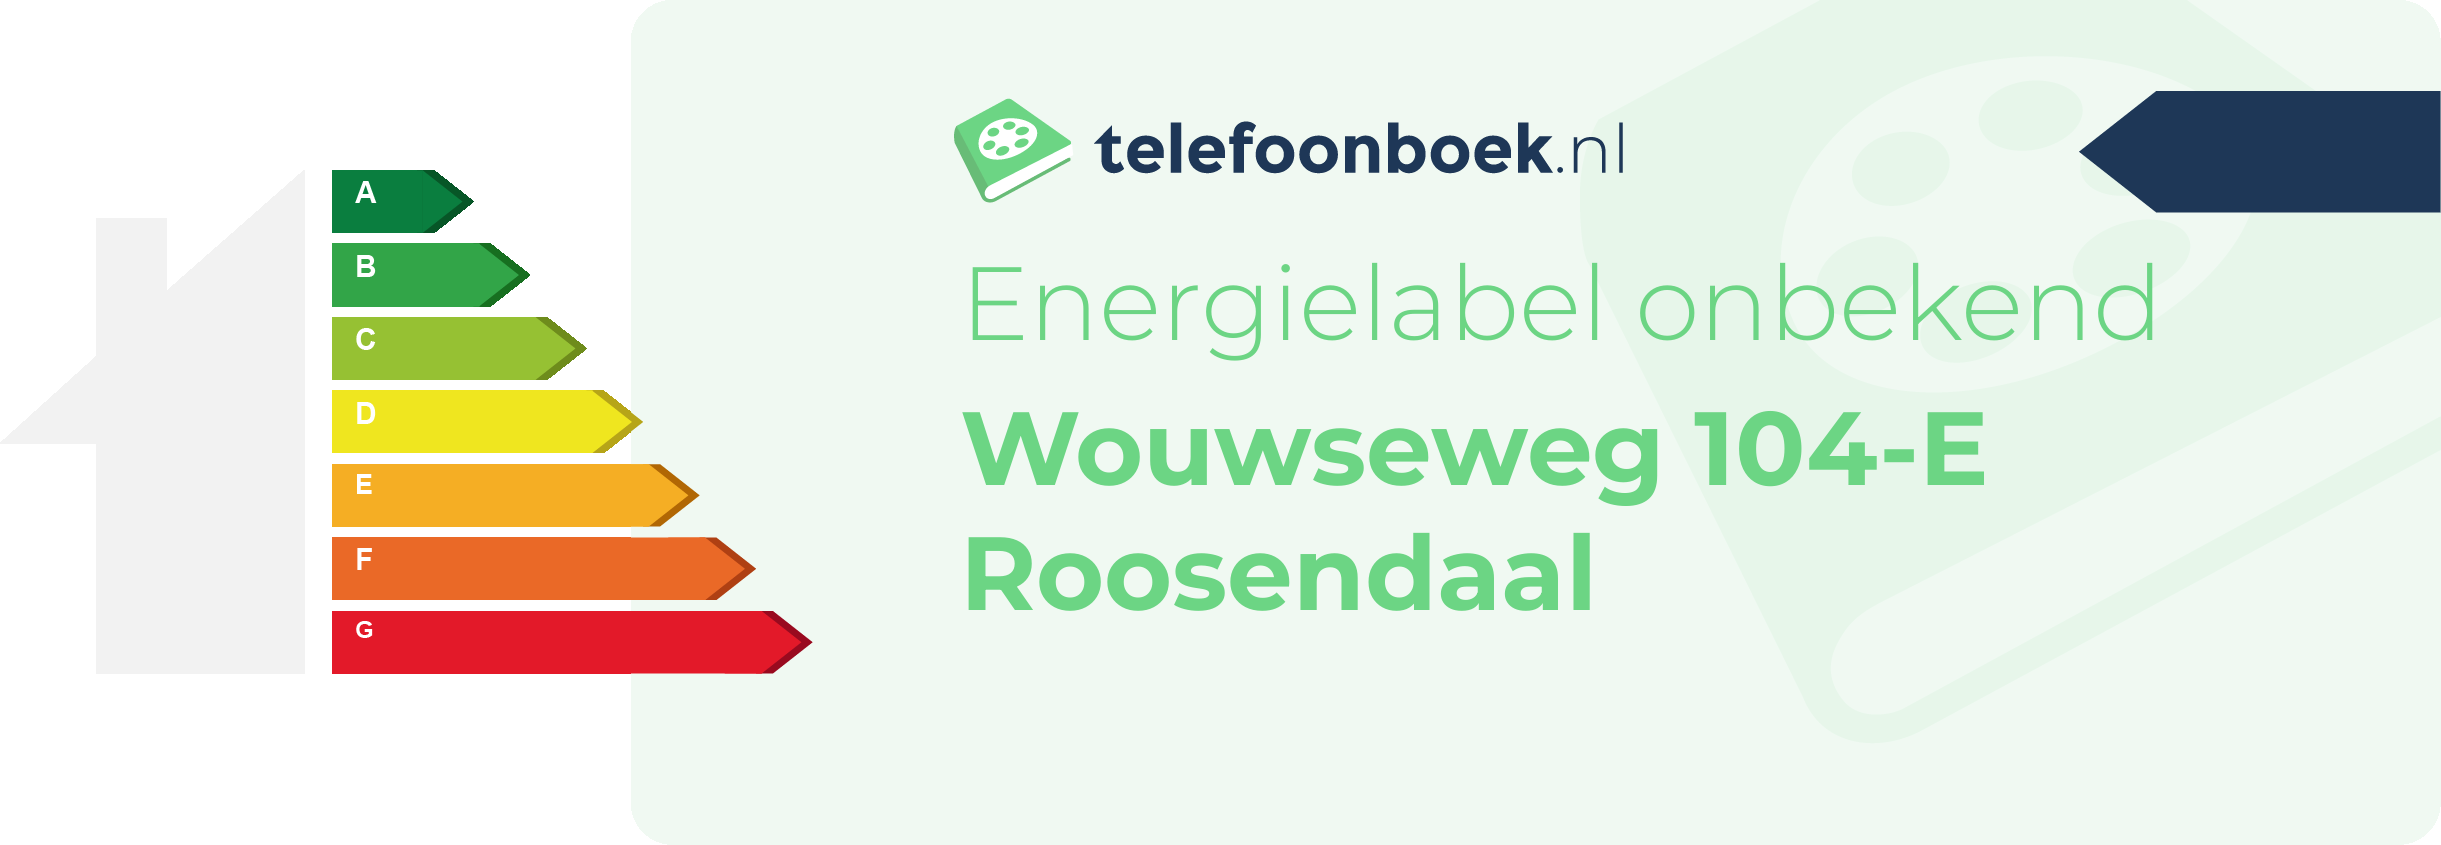 Energielabel Wouwseweg 104-E Roosendaal